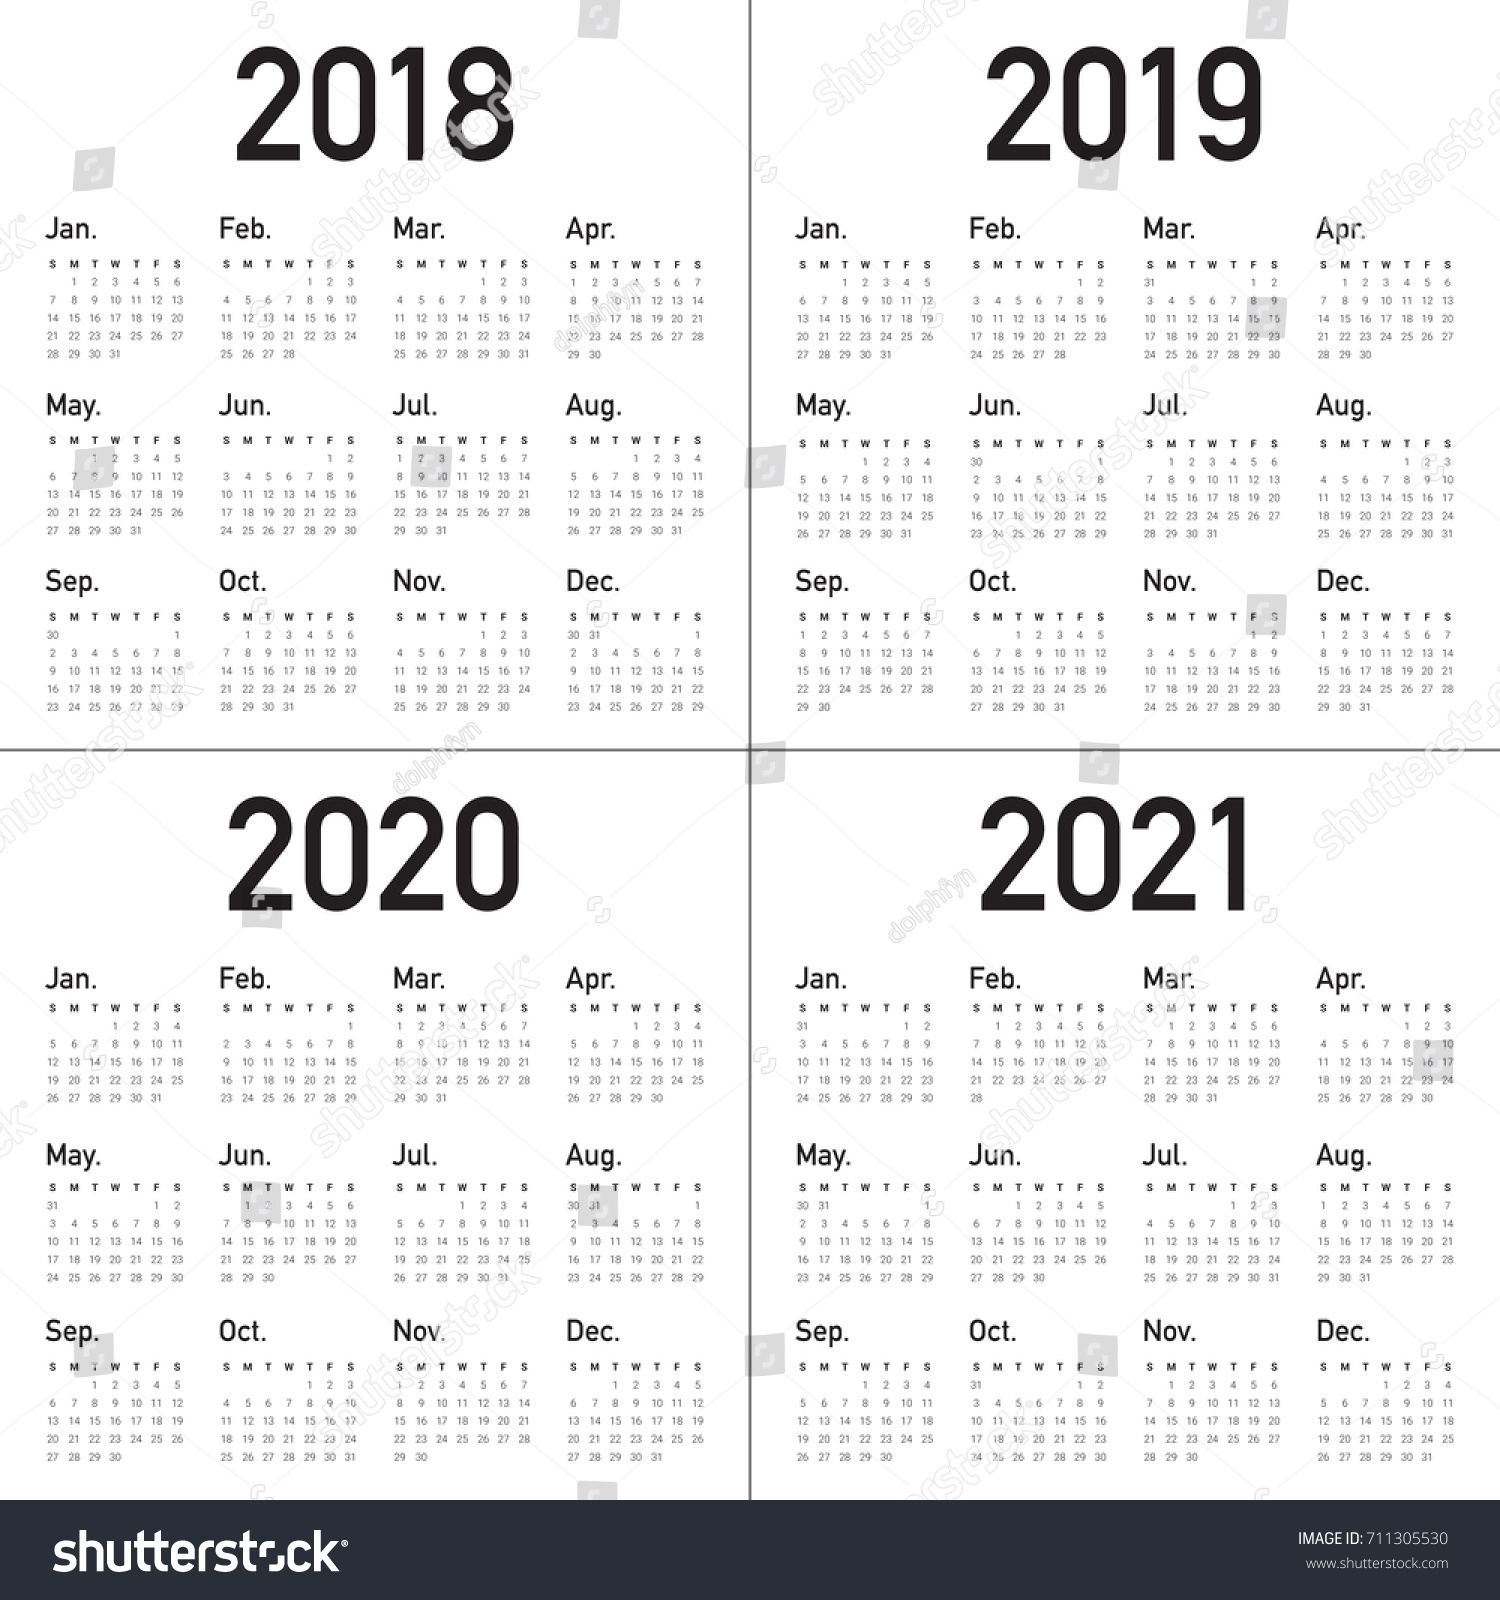 3 Year Calendar Printable | Calendar For Planning